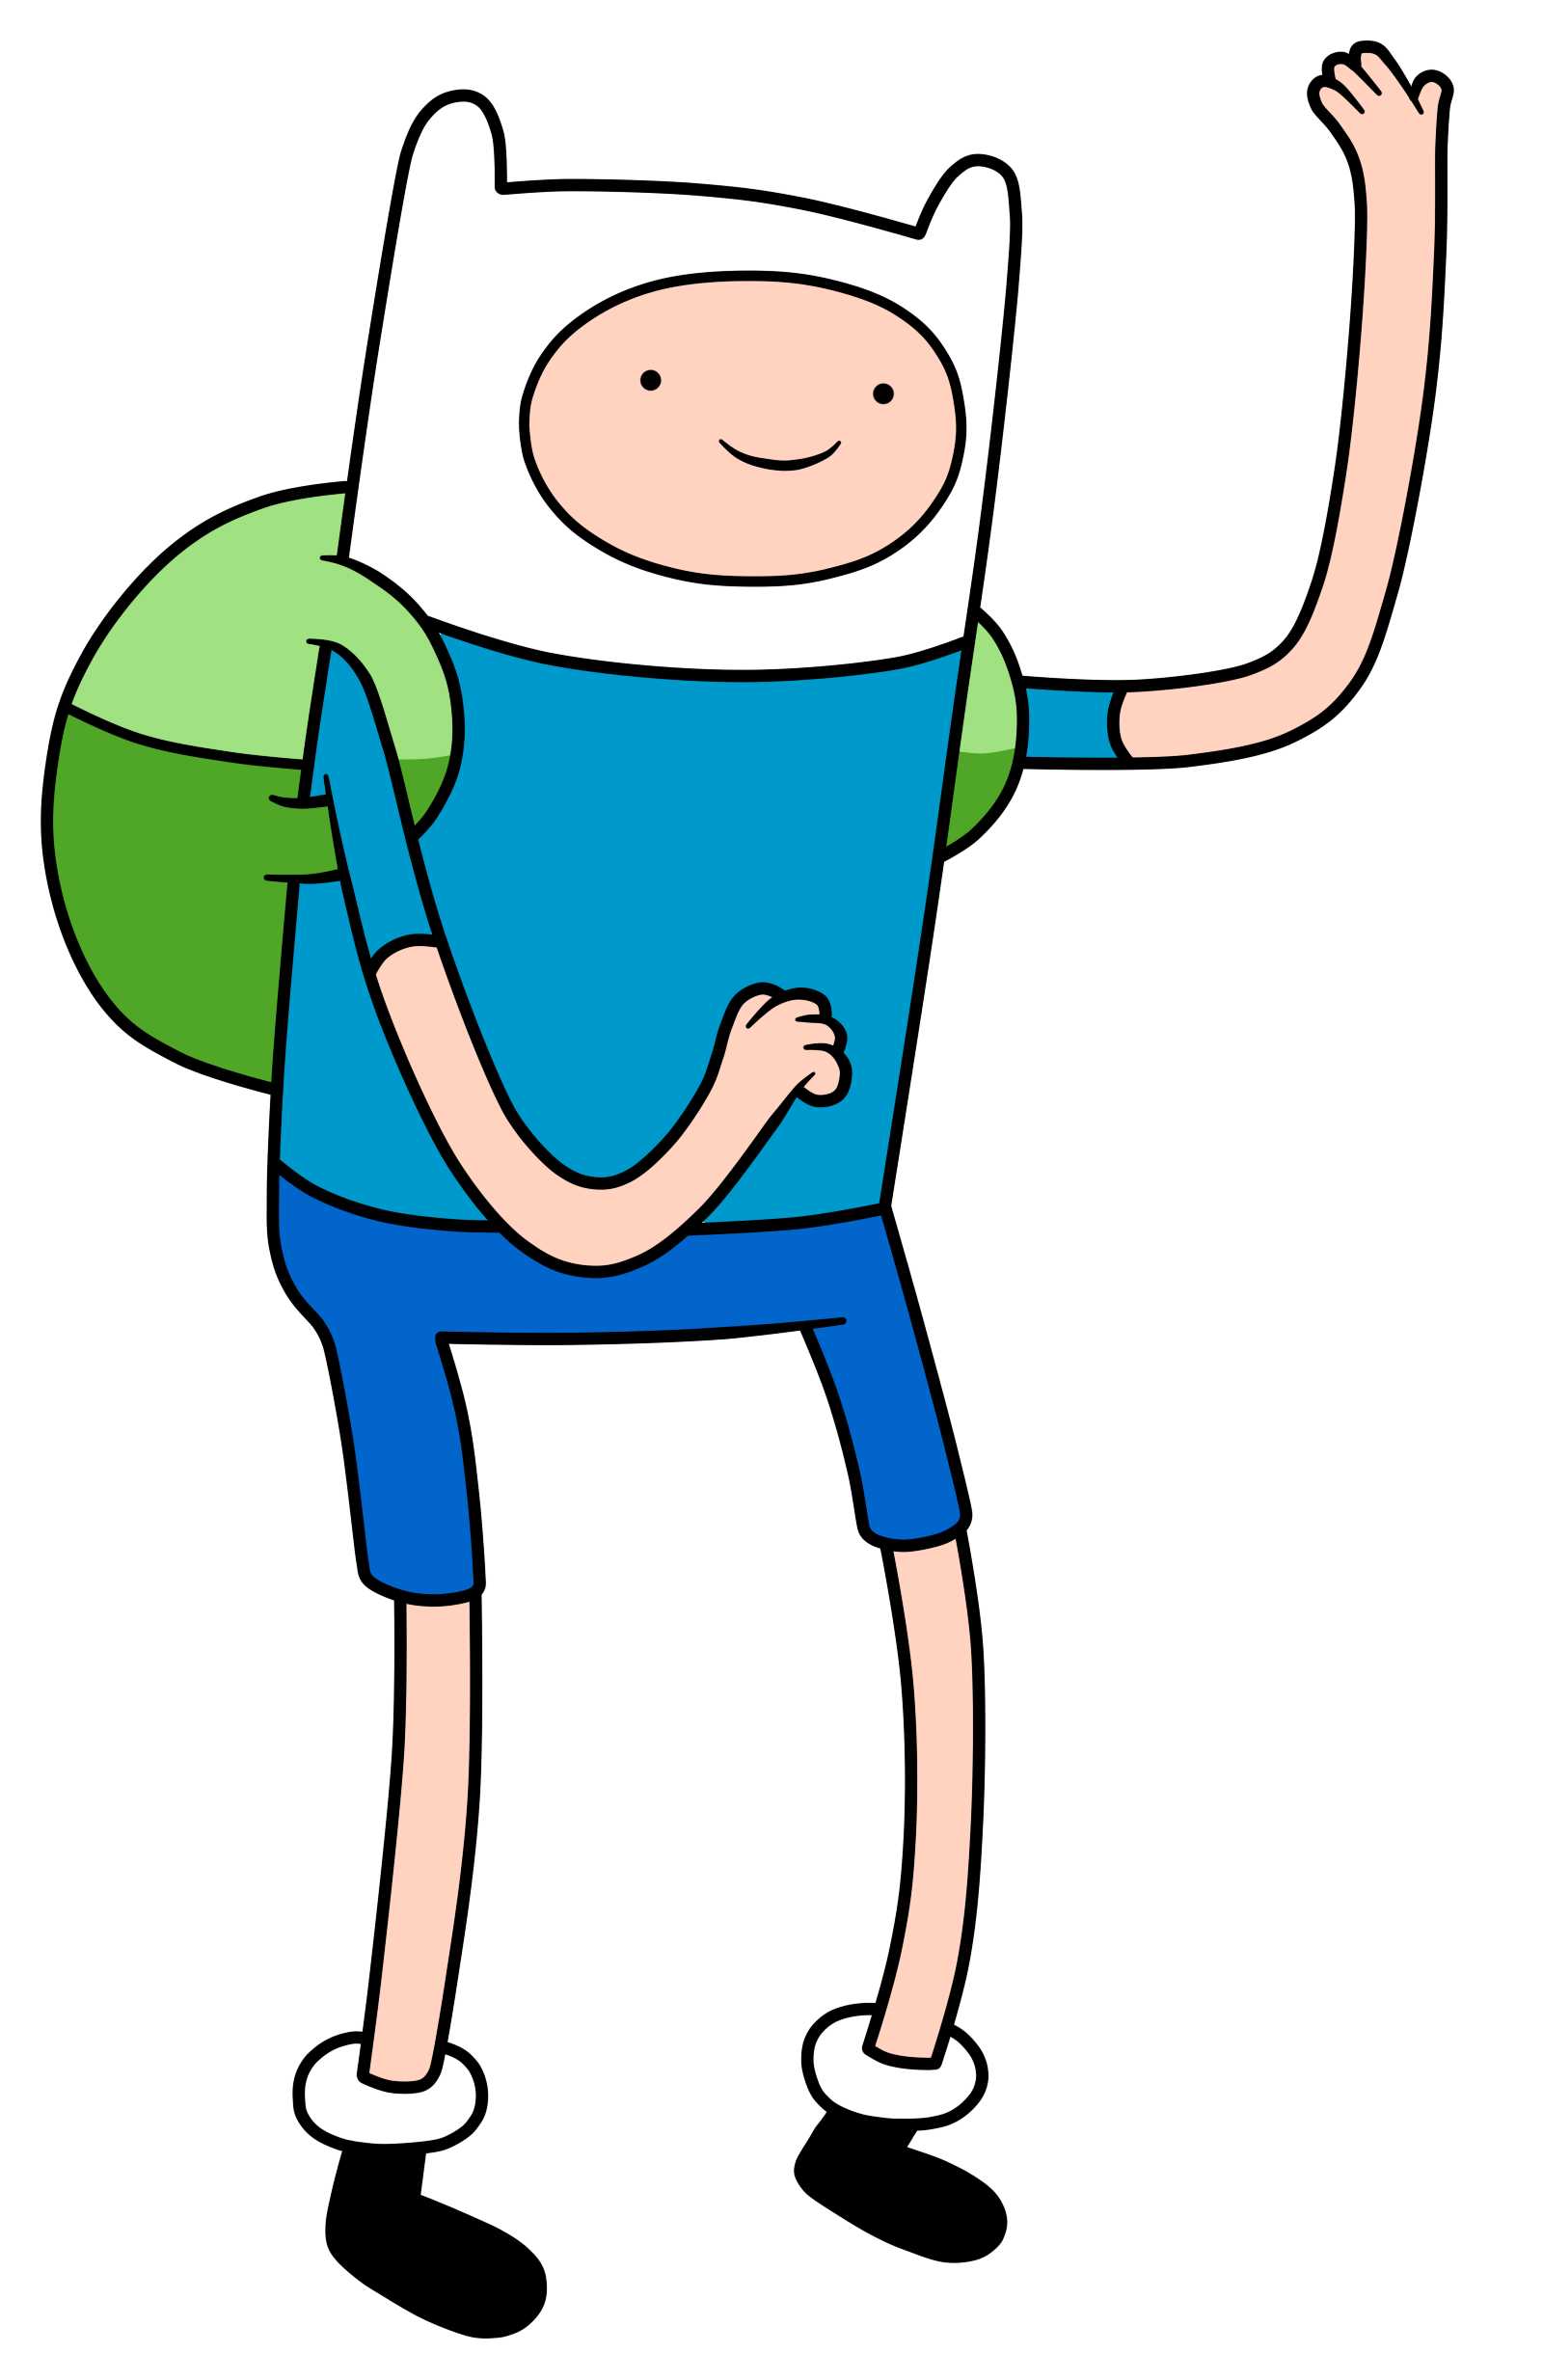 Finn Adventure Time  Warner Bros Entertainment Wiki  Fandom